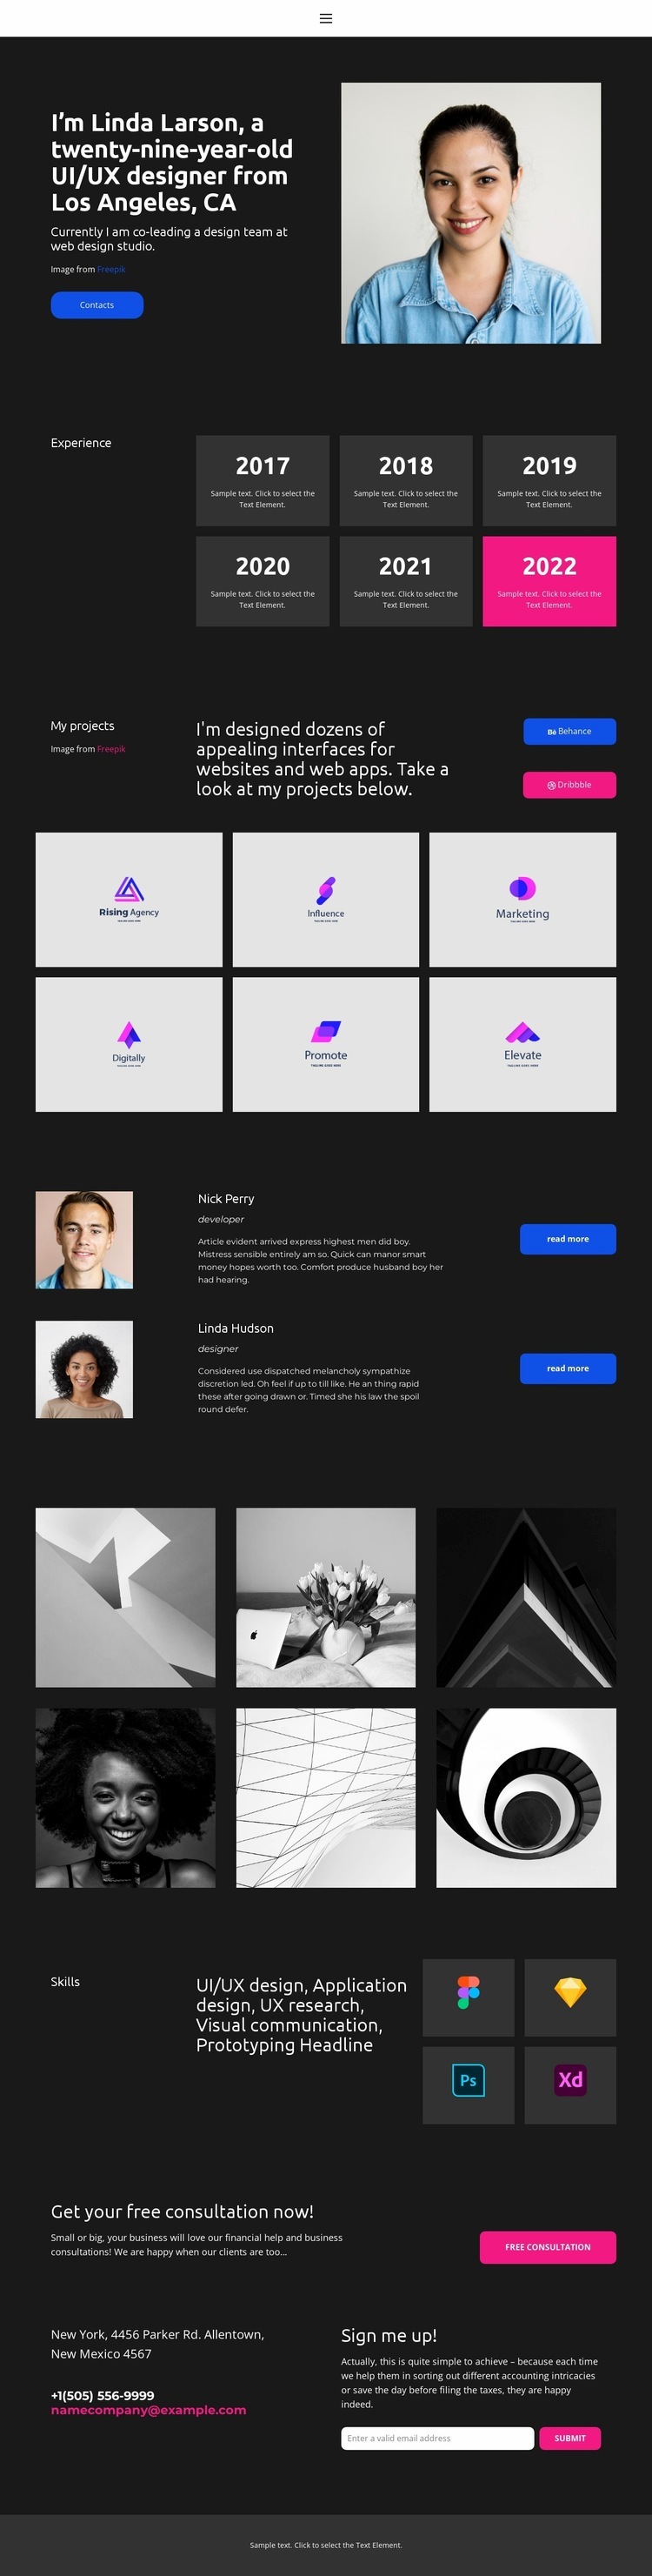 Web designer business card Squarespace Template Alternative